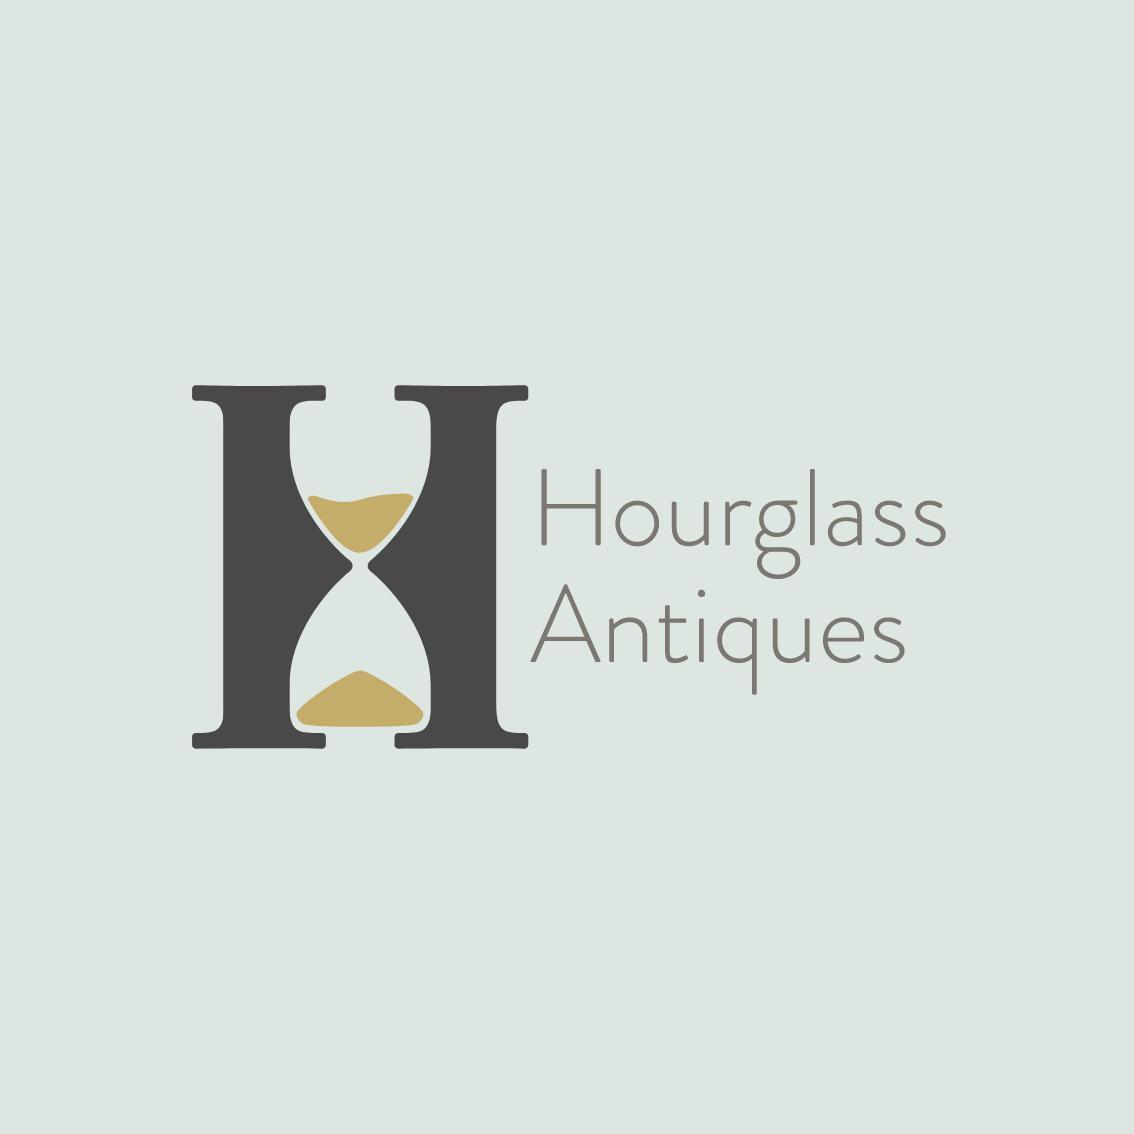 Antiques Logo - Logo design for an antique shop called Hourglass Antiques : logodesign